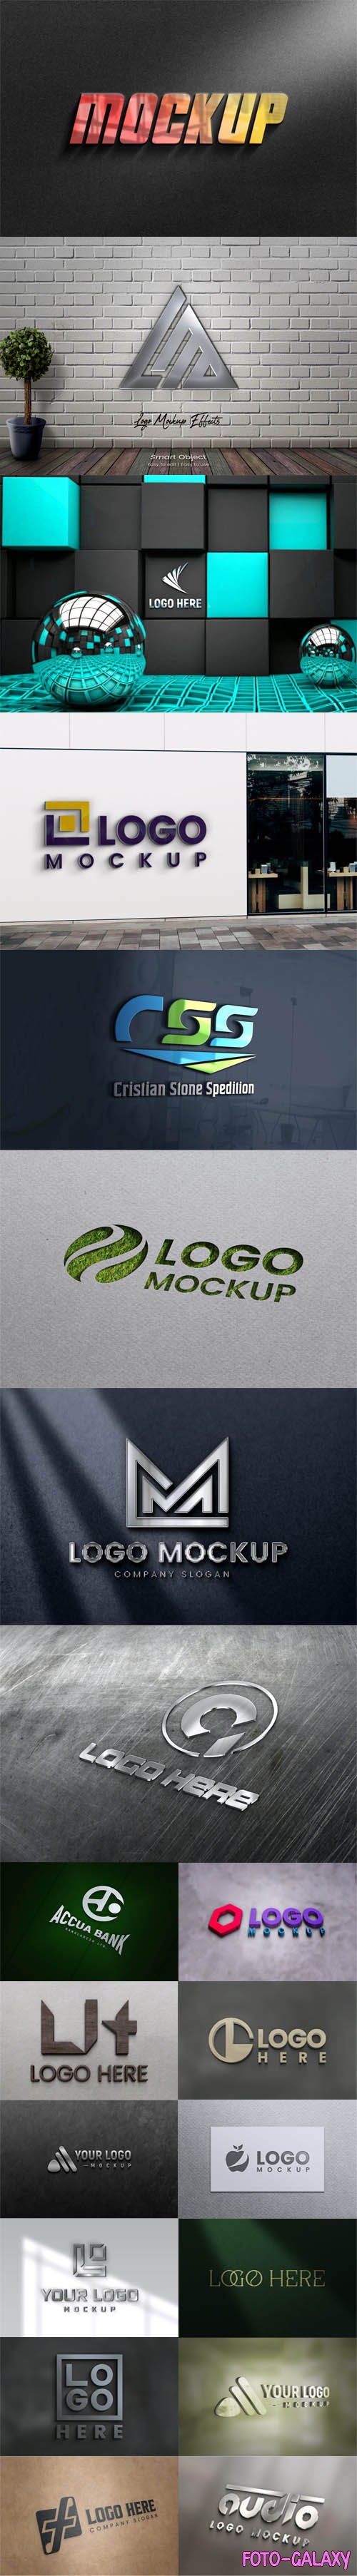 Photorealistic 3D Logo PSD Mockups Templates Pack